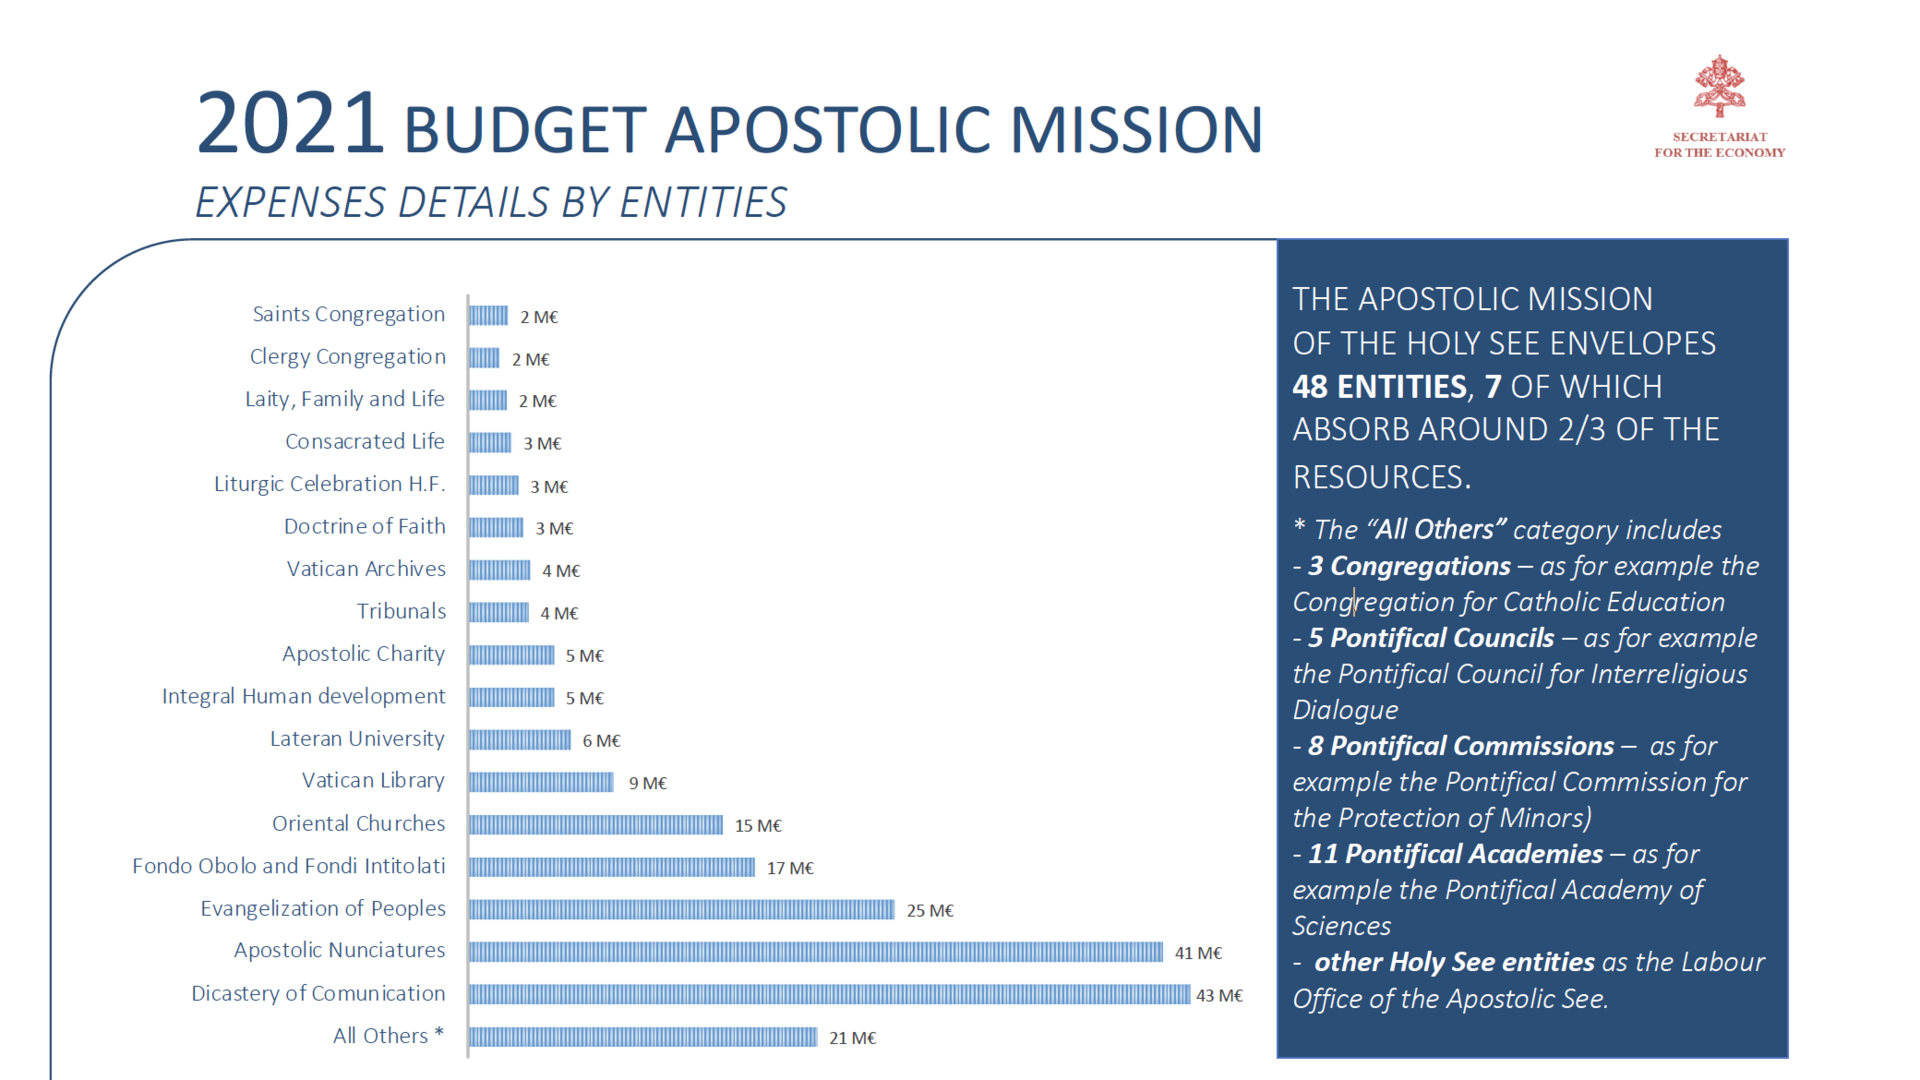 2021 Mission Budget Presentation (Secretariat for the Economy)